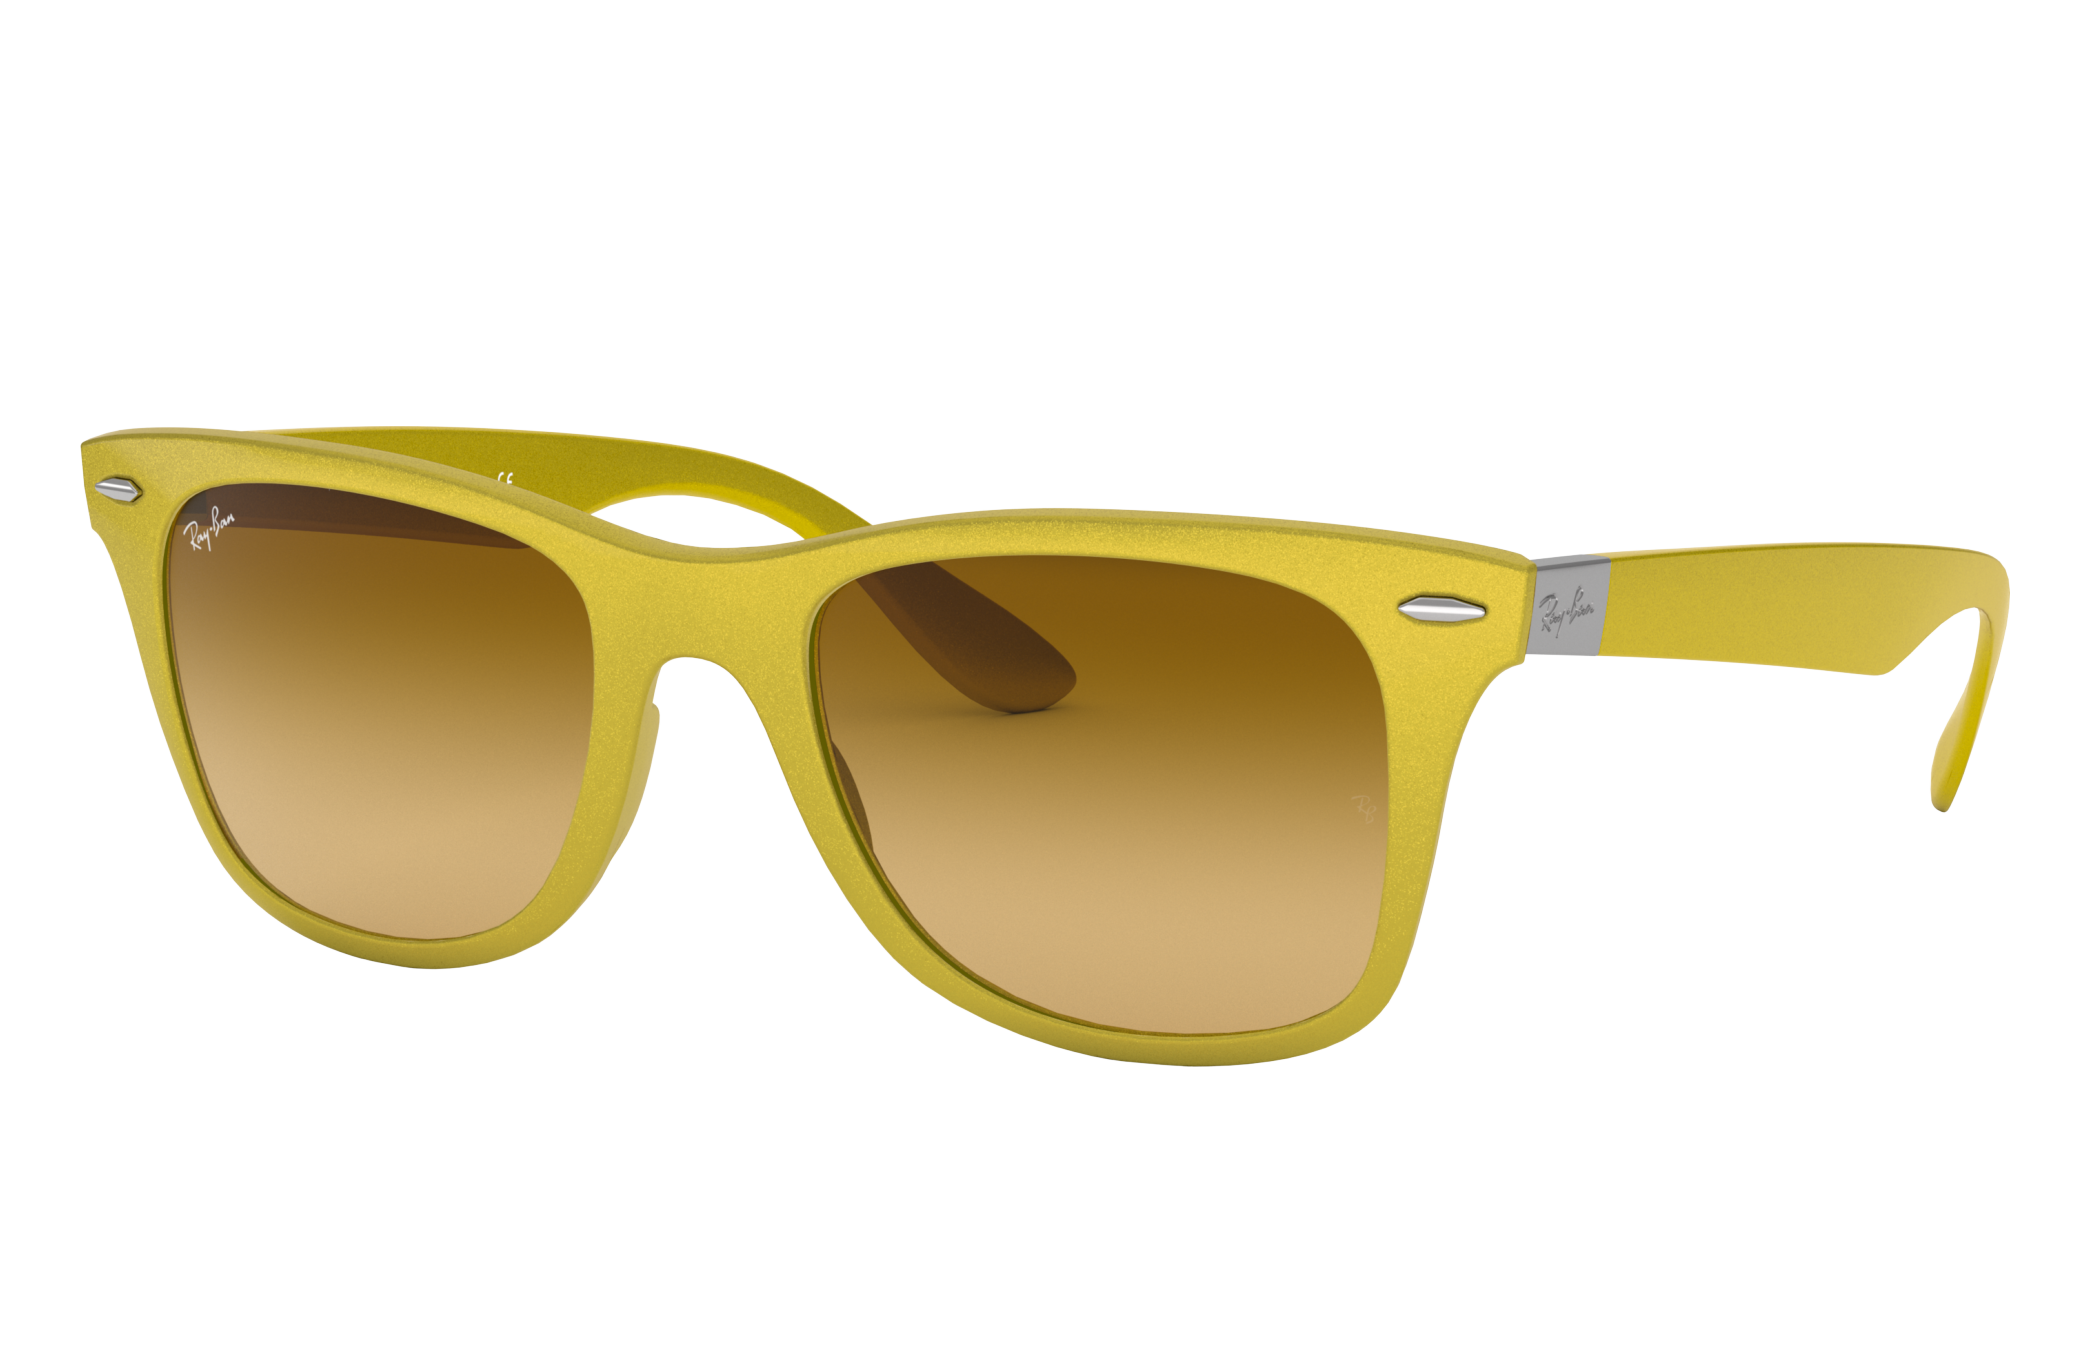 Wayfarer Liteforce Sunglasses in Yellow and Yellow/Brown | Ray-Ban®